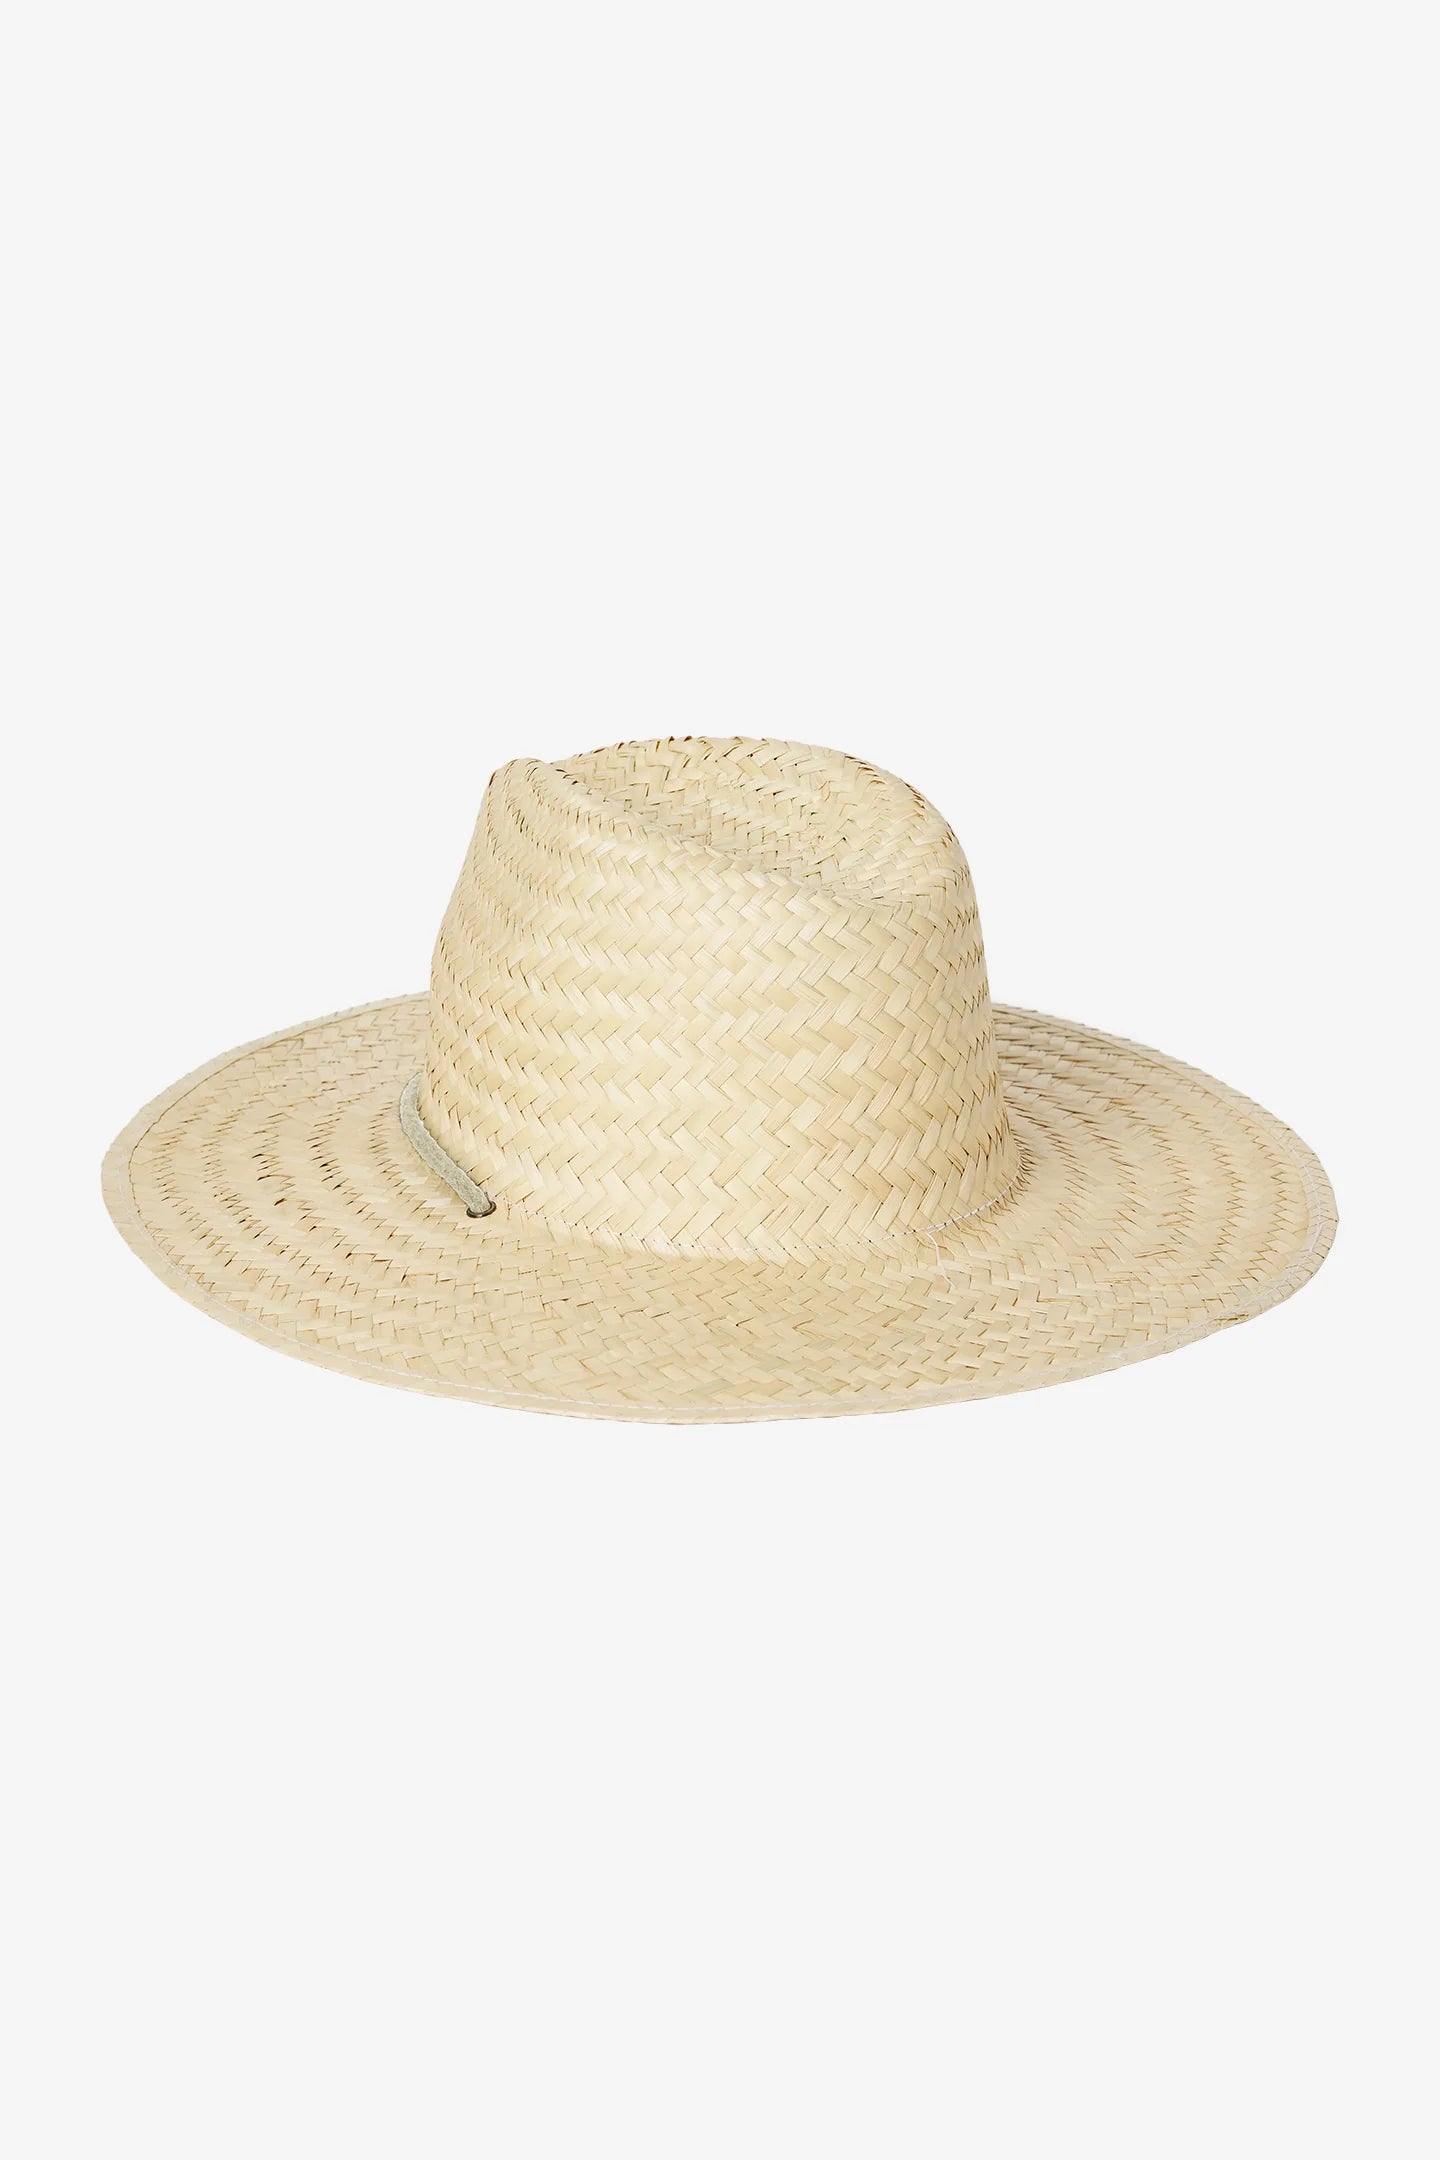 O'Neill Vista Hat